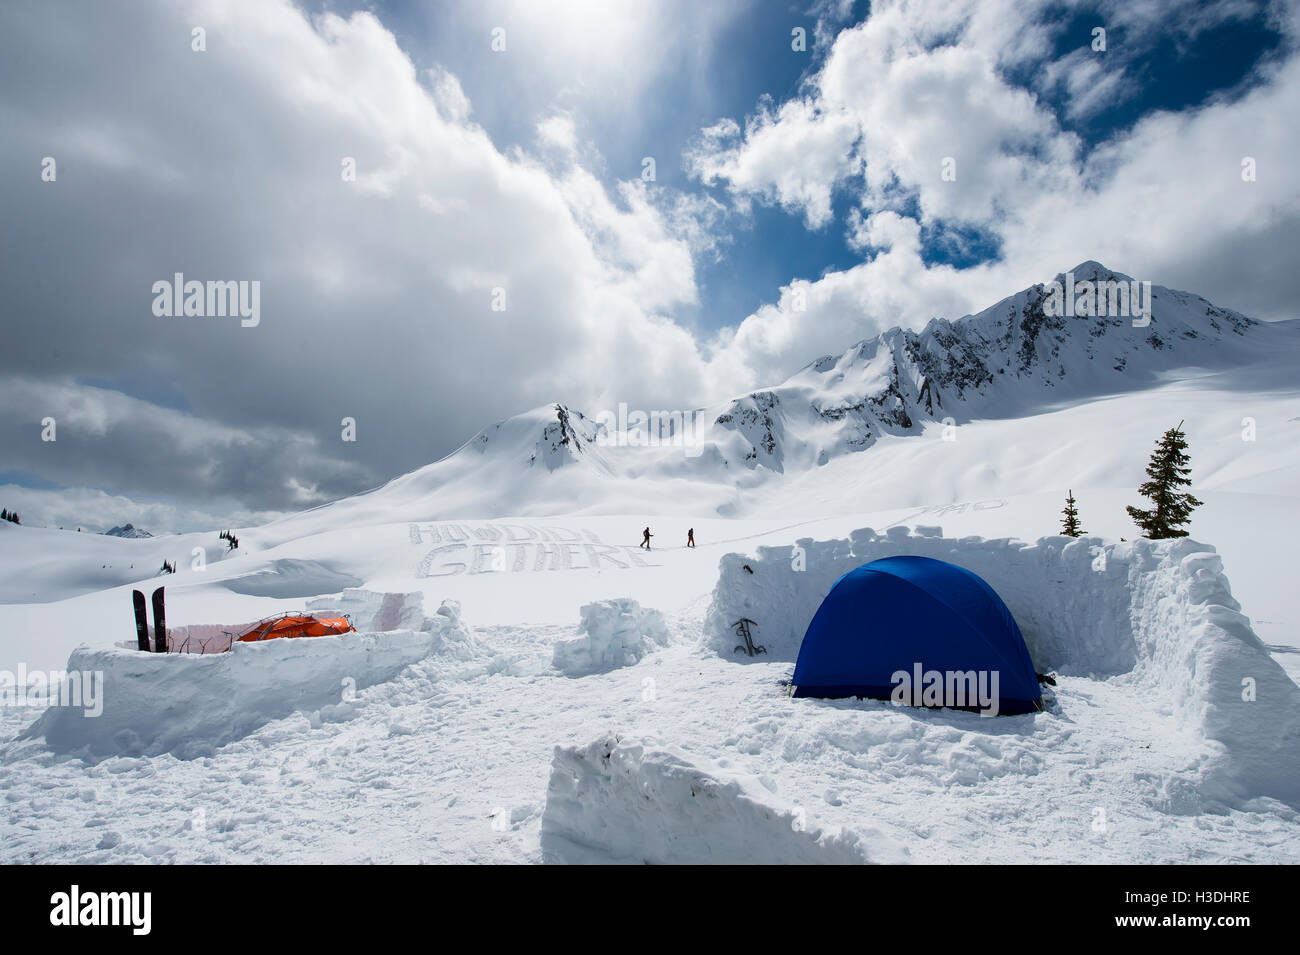 Snowboard spedizione base camp in Canada Foto stock - Alamy